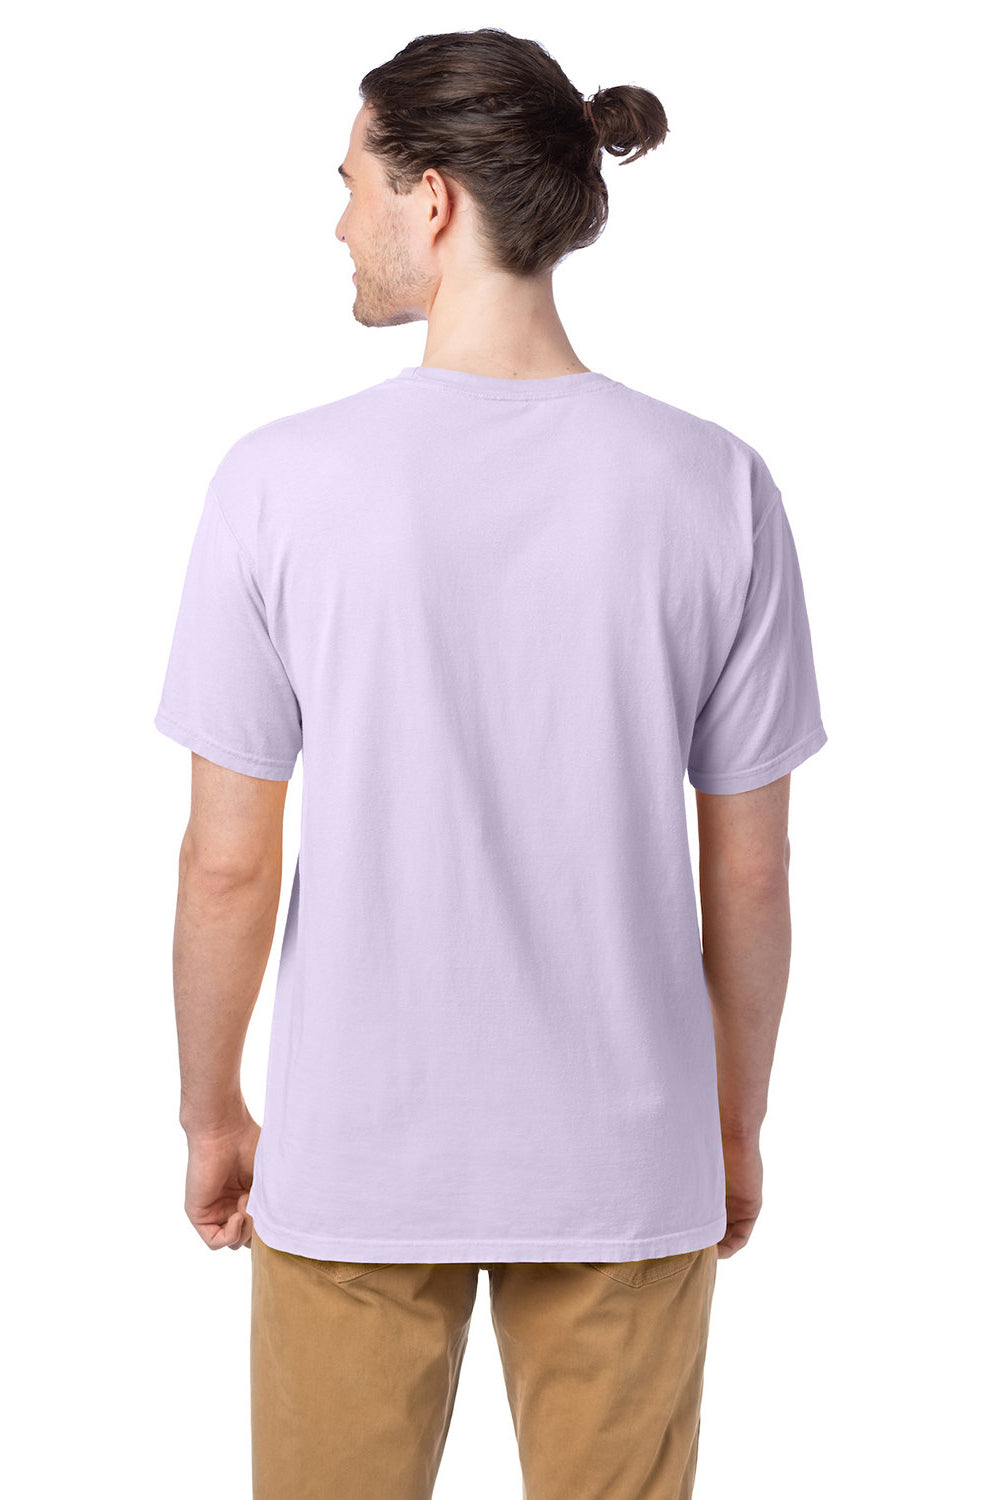 ComfortWash by Hanes GDH100 Mens Short Sleeve Crewneck T-Shirt Future Lavender Purple Back